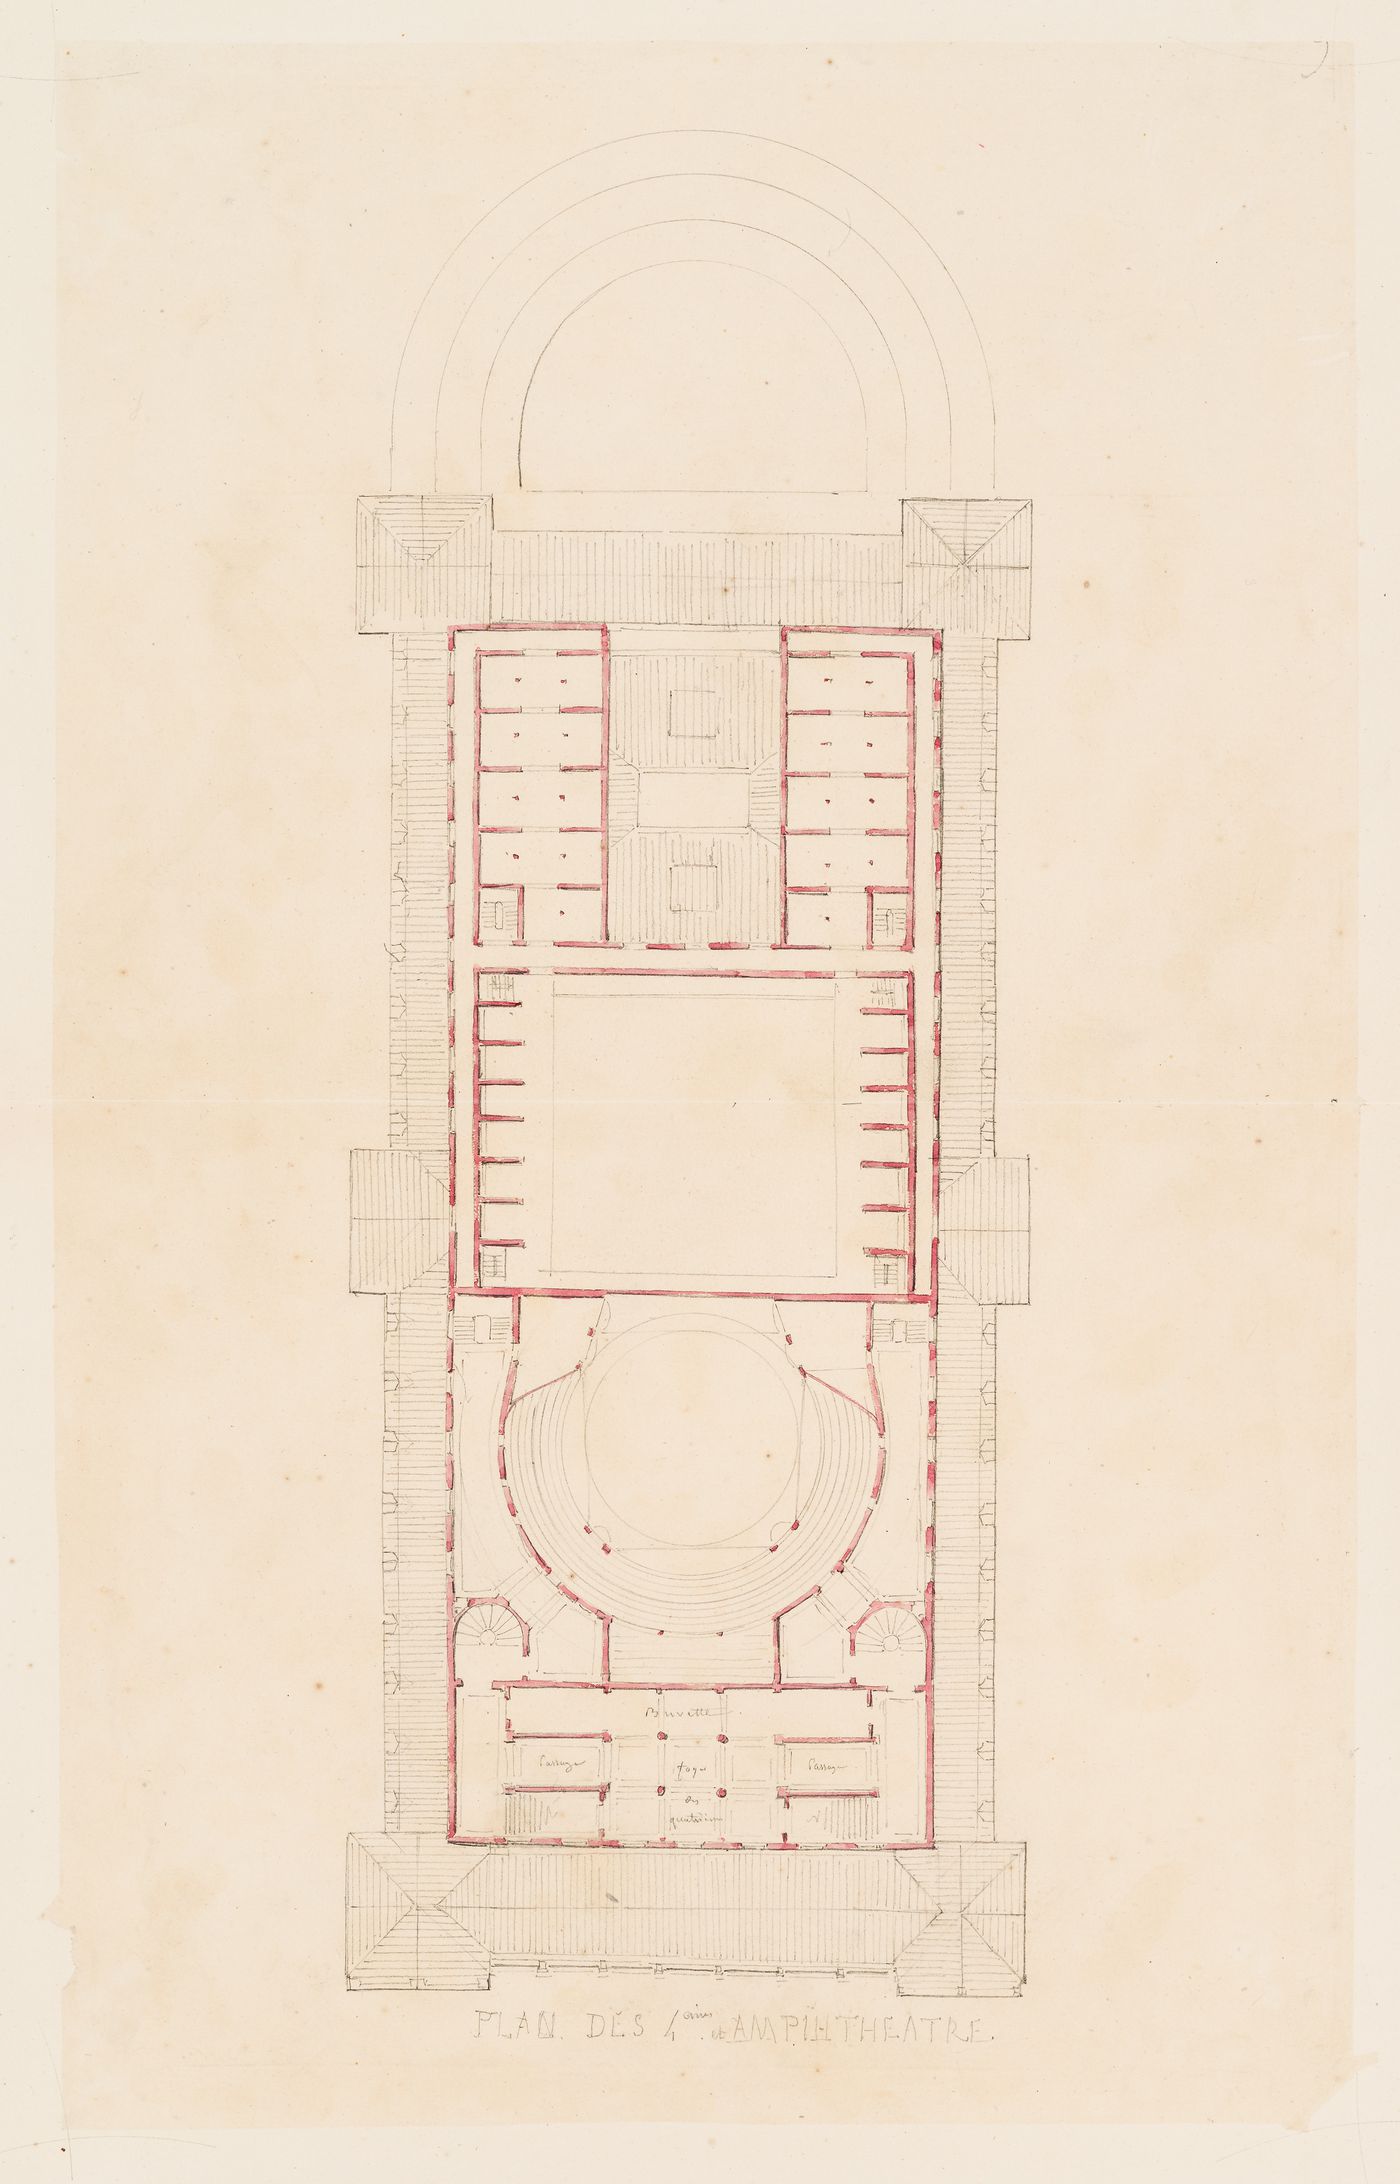 Plan for "4e étage" and the amphitheatre for an opera house for the Académie royale de musique